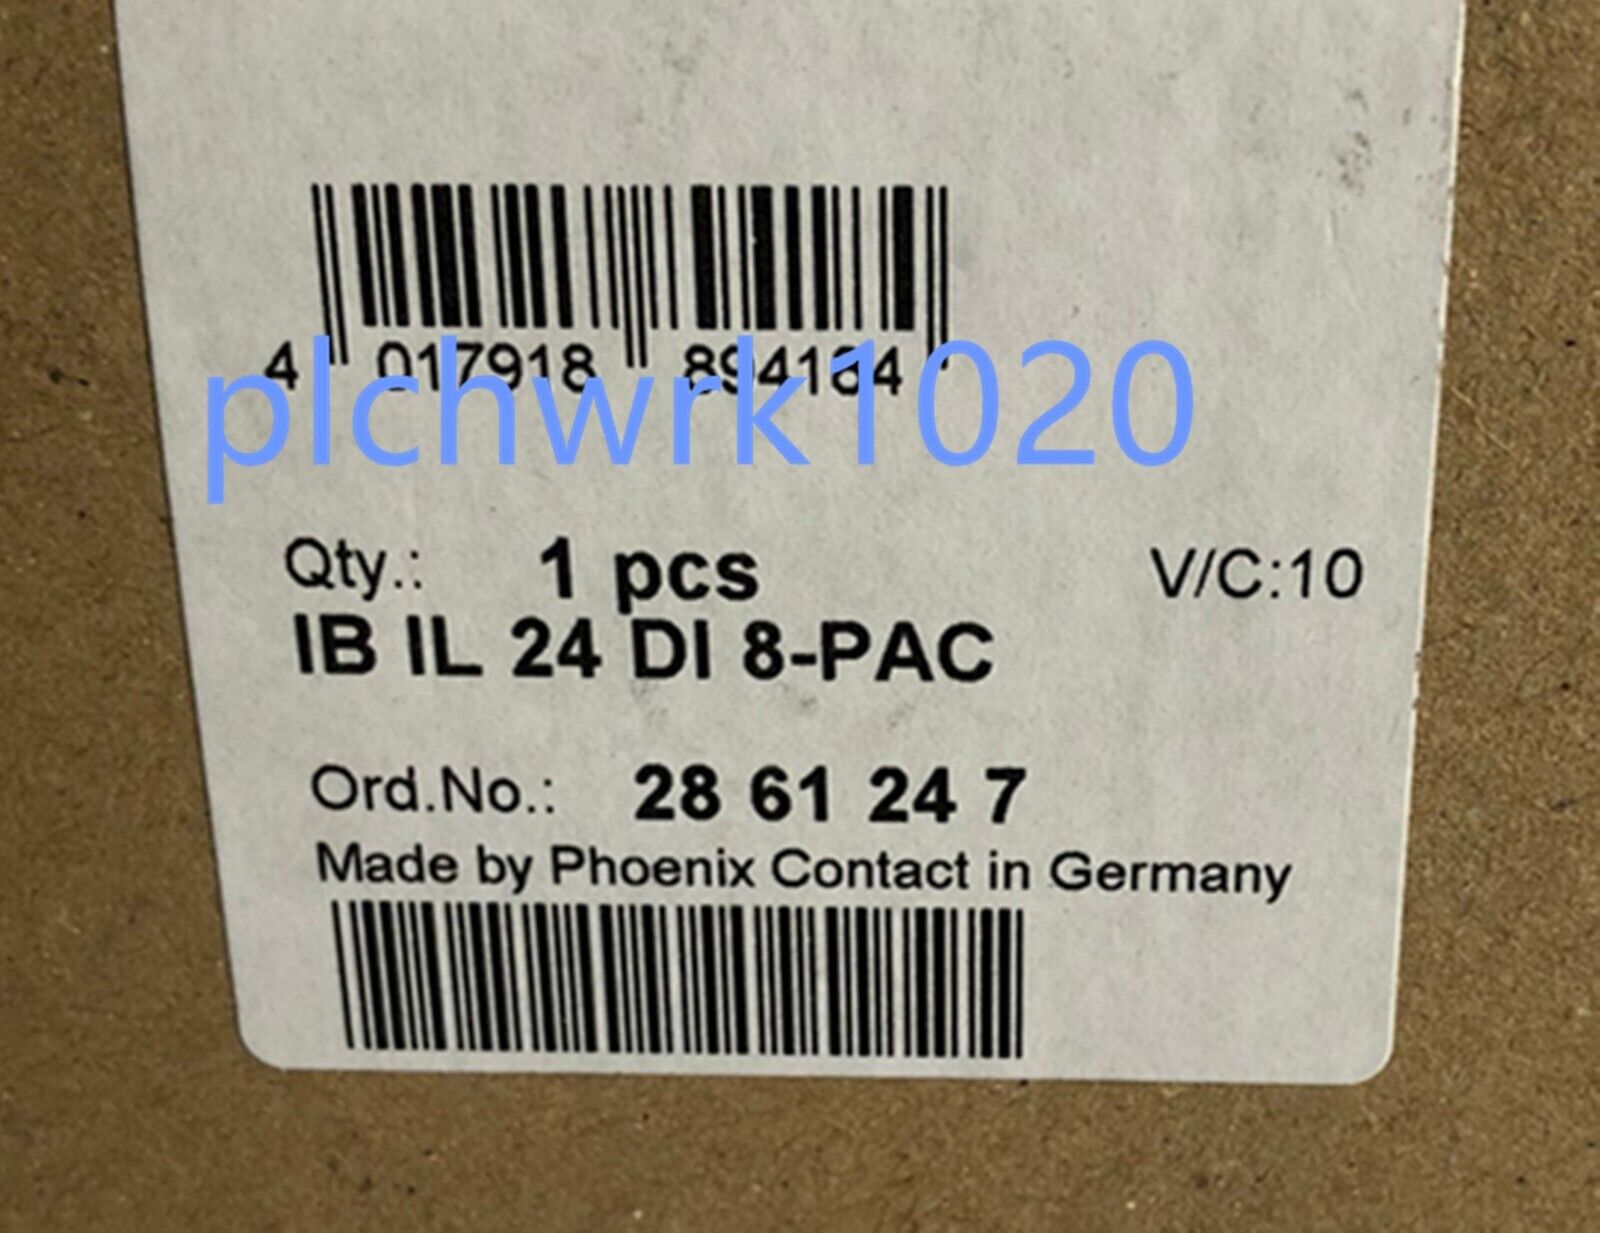 1 PCS NEW IN BOX PHCENIX CONTACT MODULE IB IL 24 DI 8-PAC 2861247